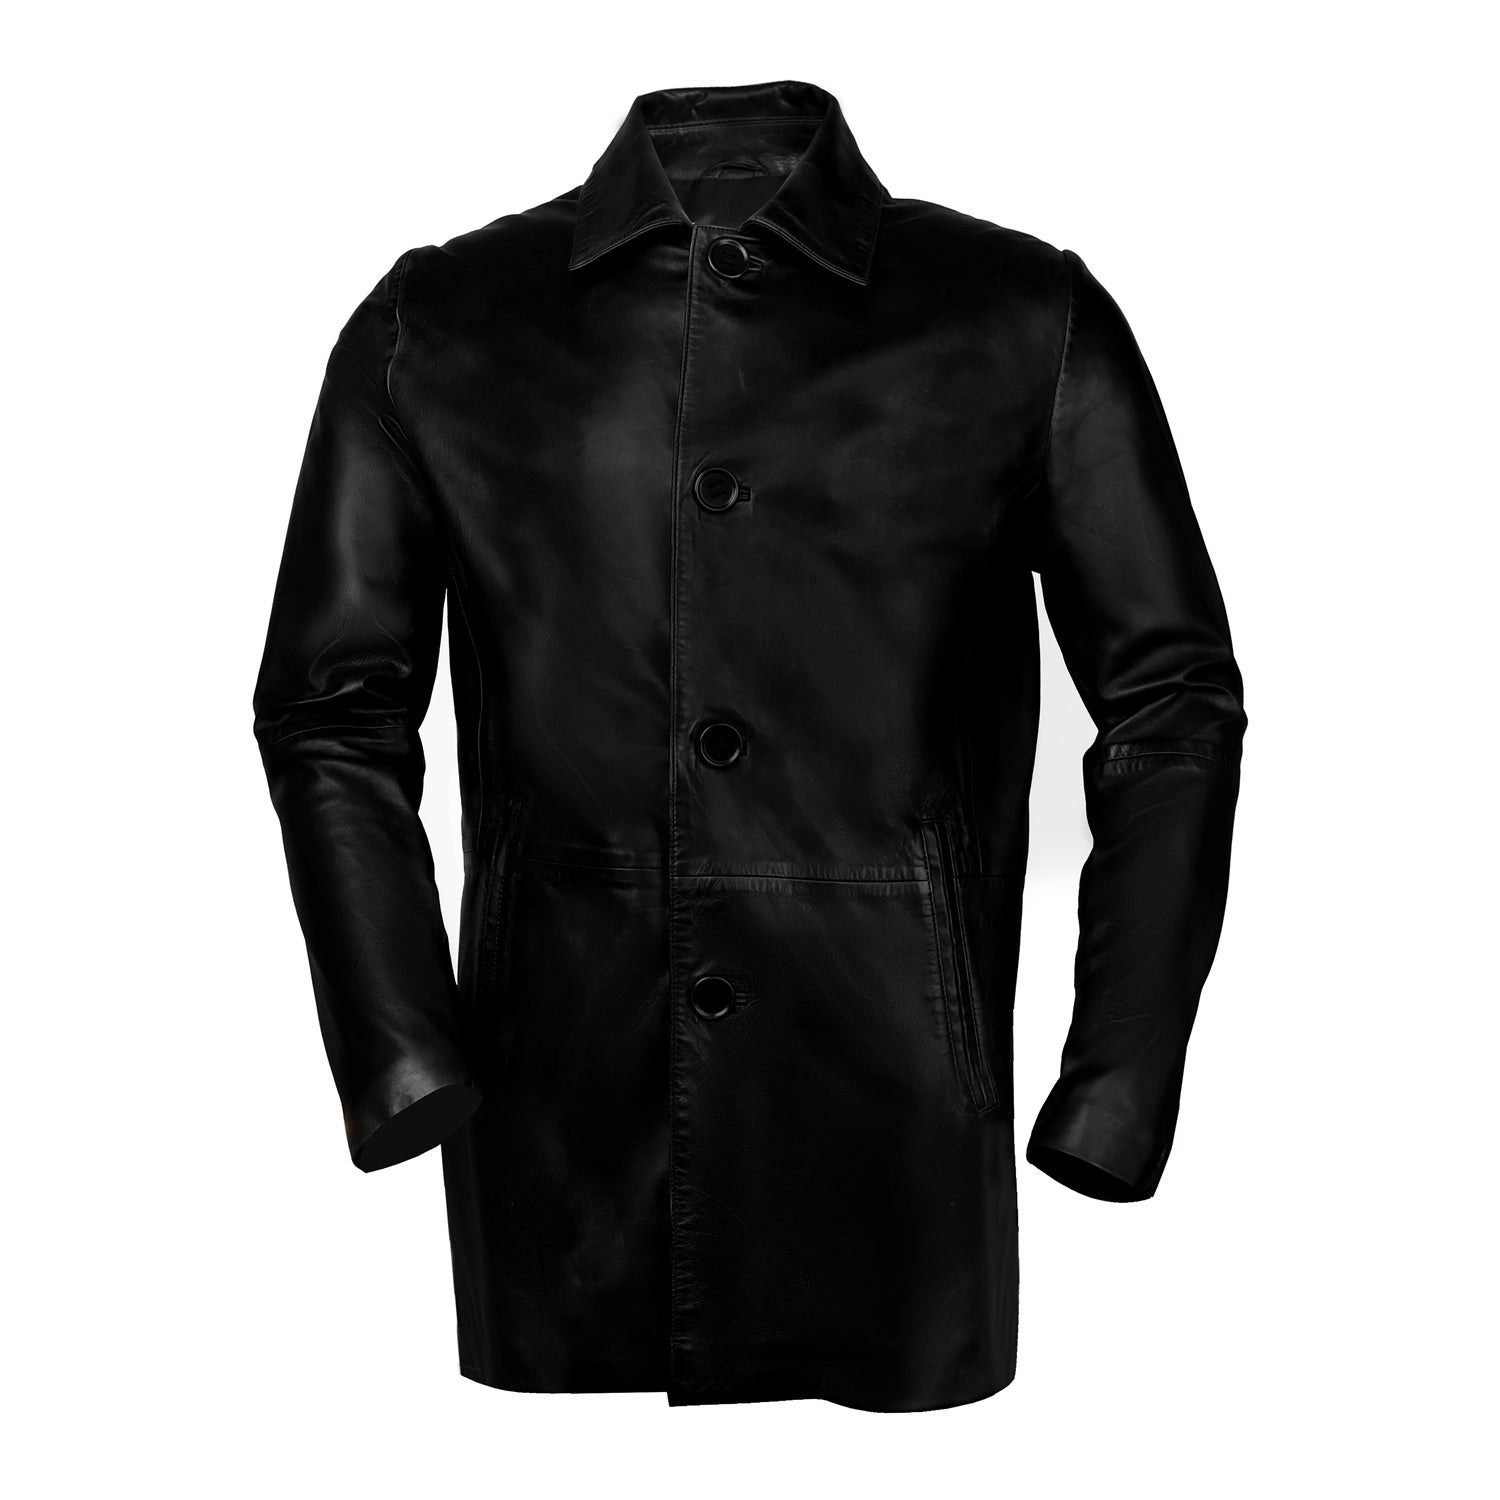 Long Shirt Style Collar Black Leather Jacket For Men By Brune & Bareskin